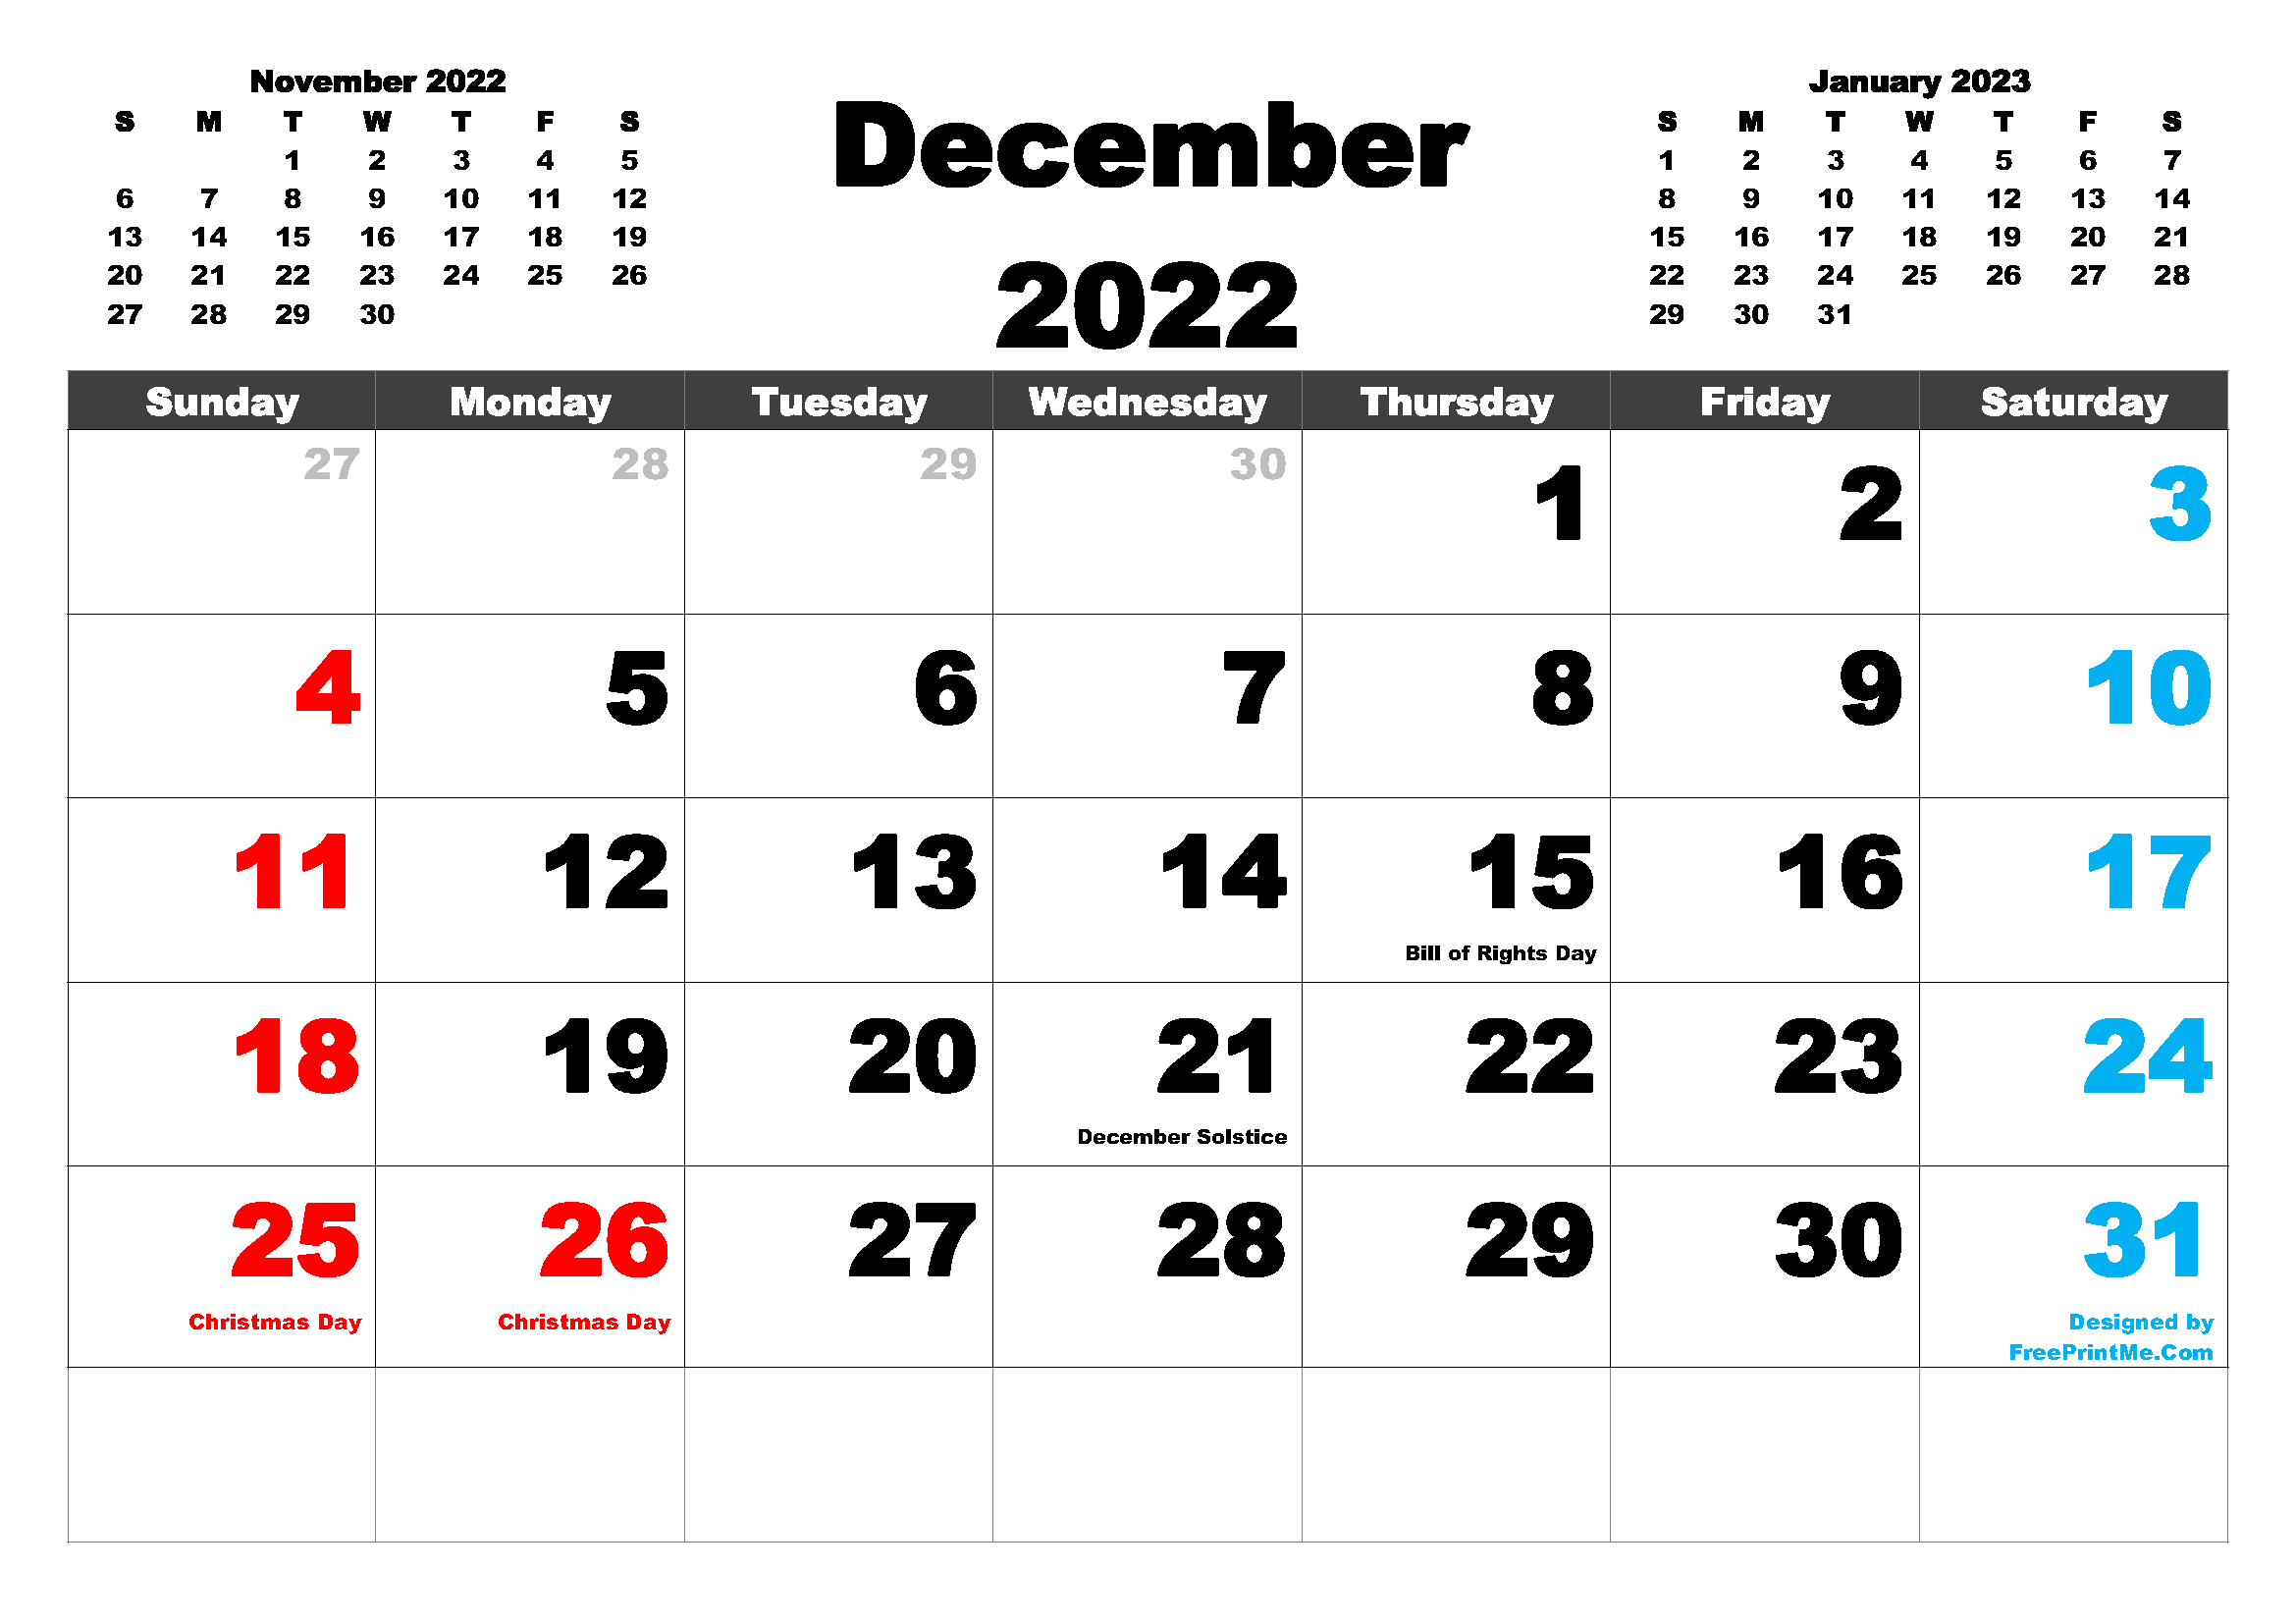 December Calendar Template 2022 Free Printable December 2022 Calendar Pdf, Png Image